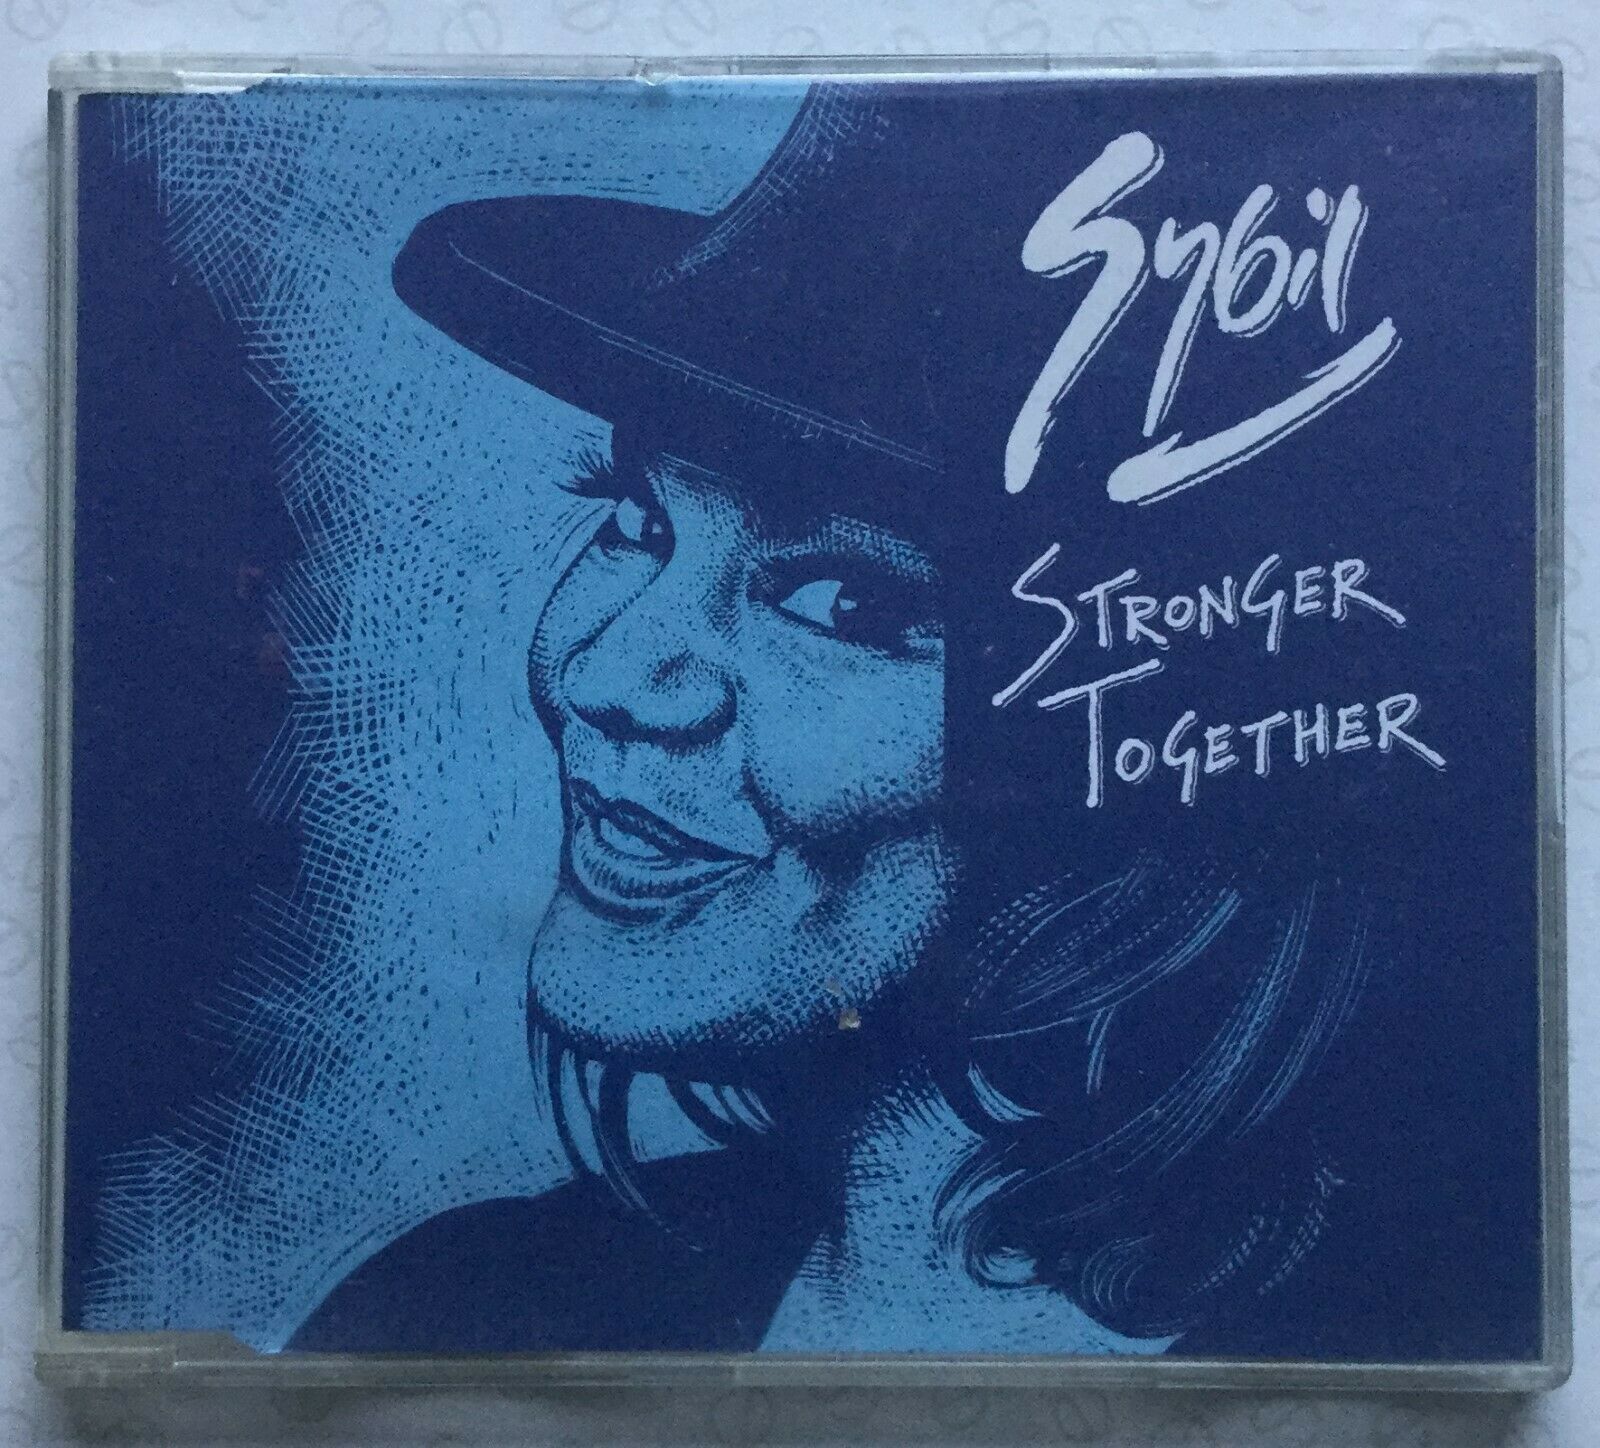 Sybil - Stronger Together (CDM, Promo) PWCD 269 (UK) (1993)